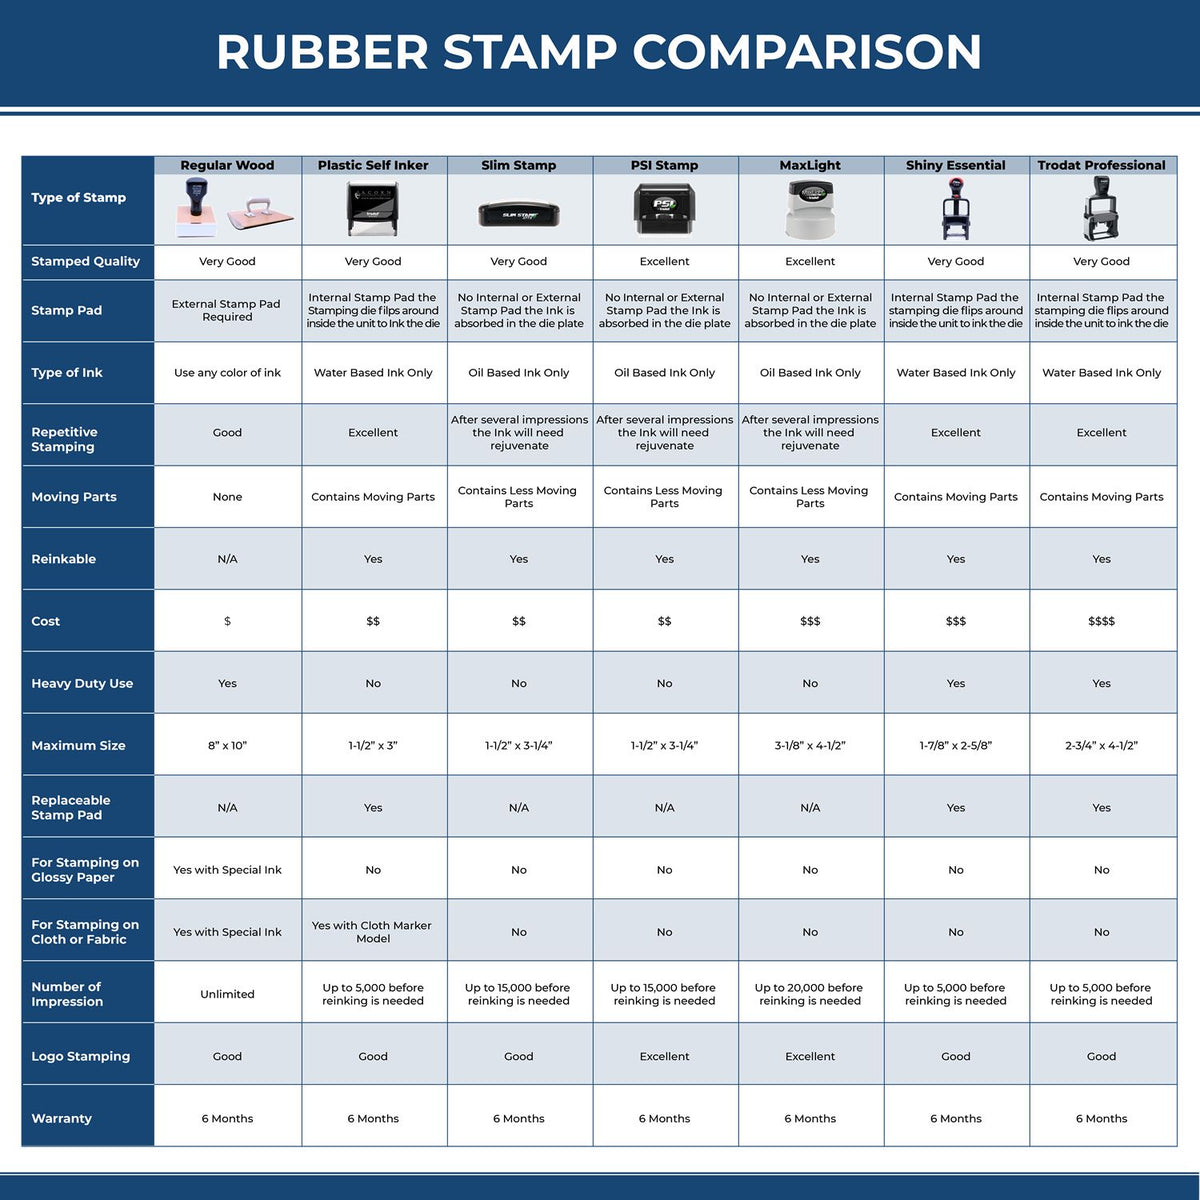 Jumbo Fax Memo Xstamper Stamp 5103 Rubber Stamp Comparison